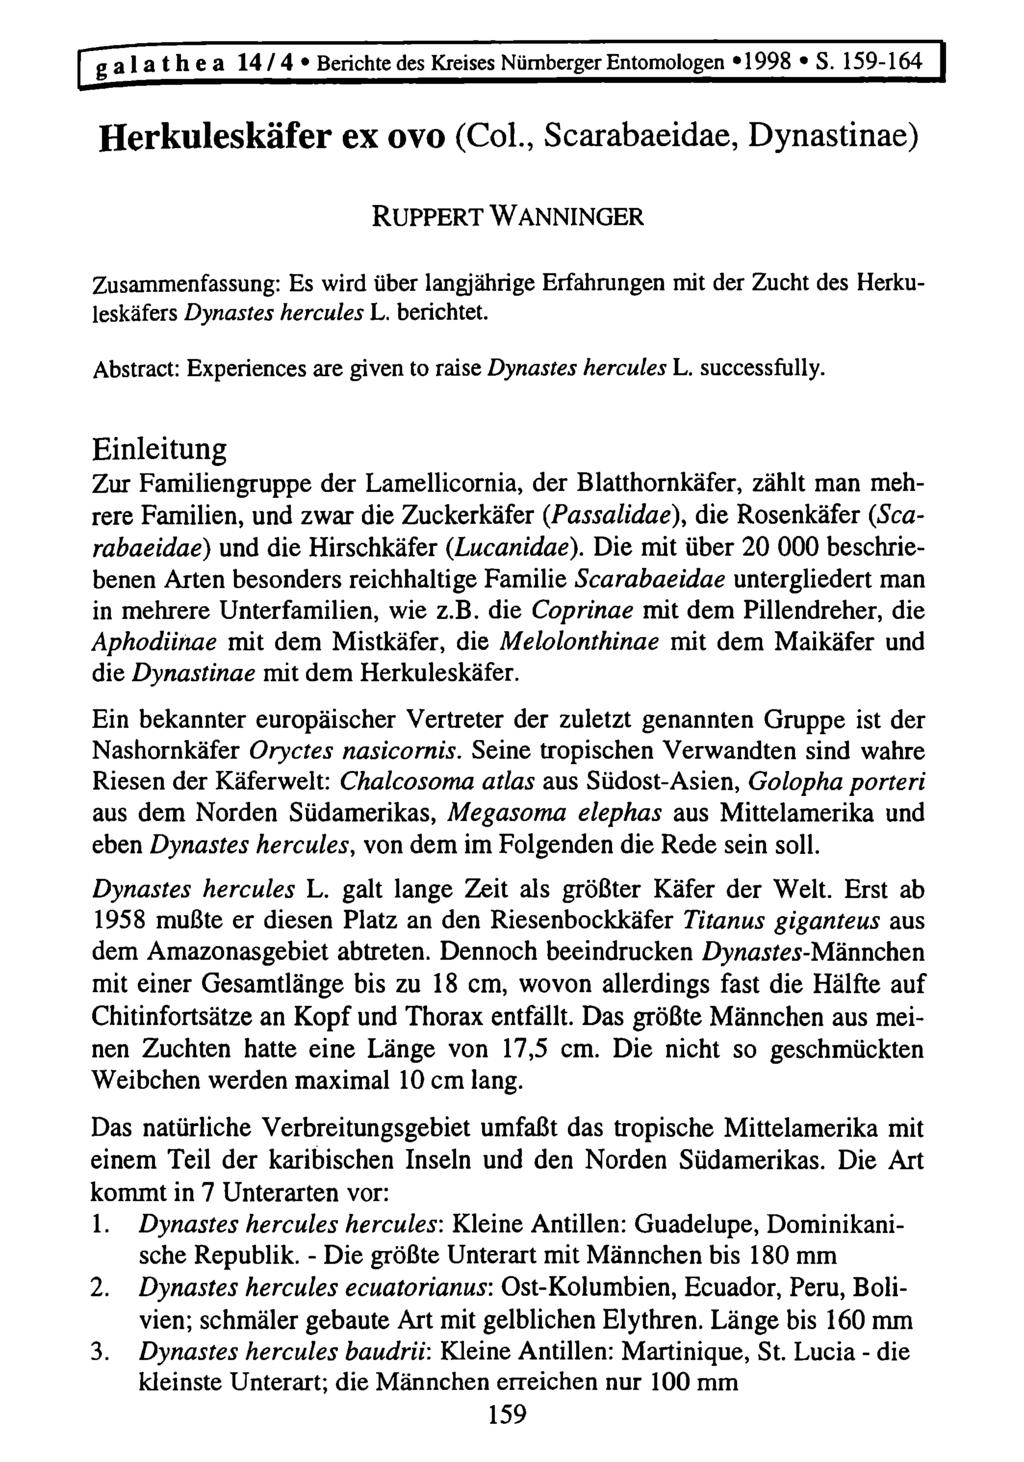 Kreis Nürnberger Entomologen; download unter www.biologiezentrum.at Qg^aJJiej^l4 4jJBerichte^de^(reises^Niimbei erento^ Herkuleskäfer ex ovo (Col.